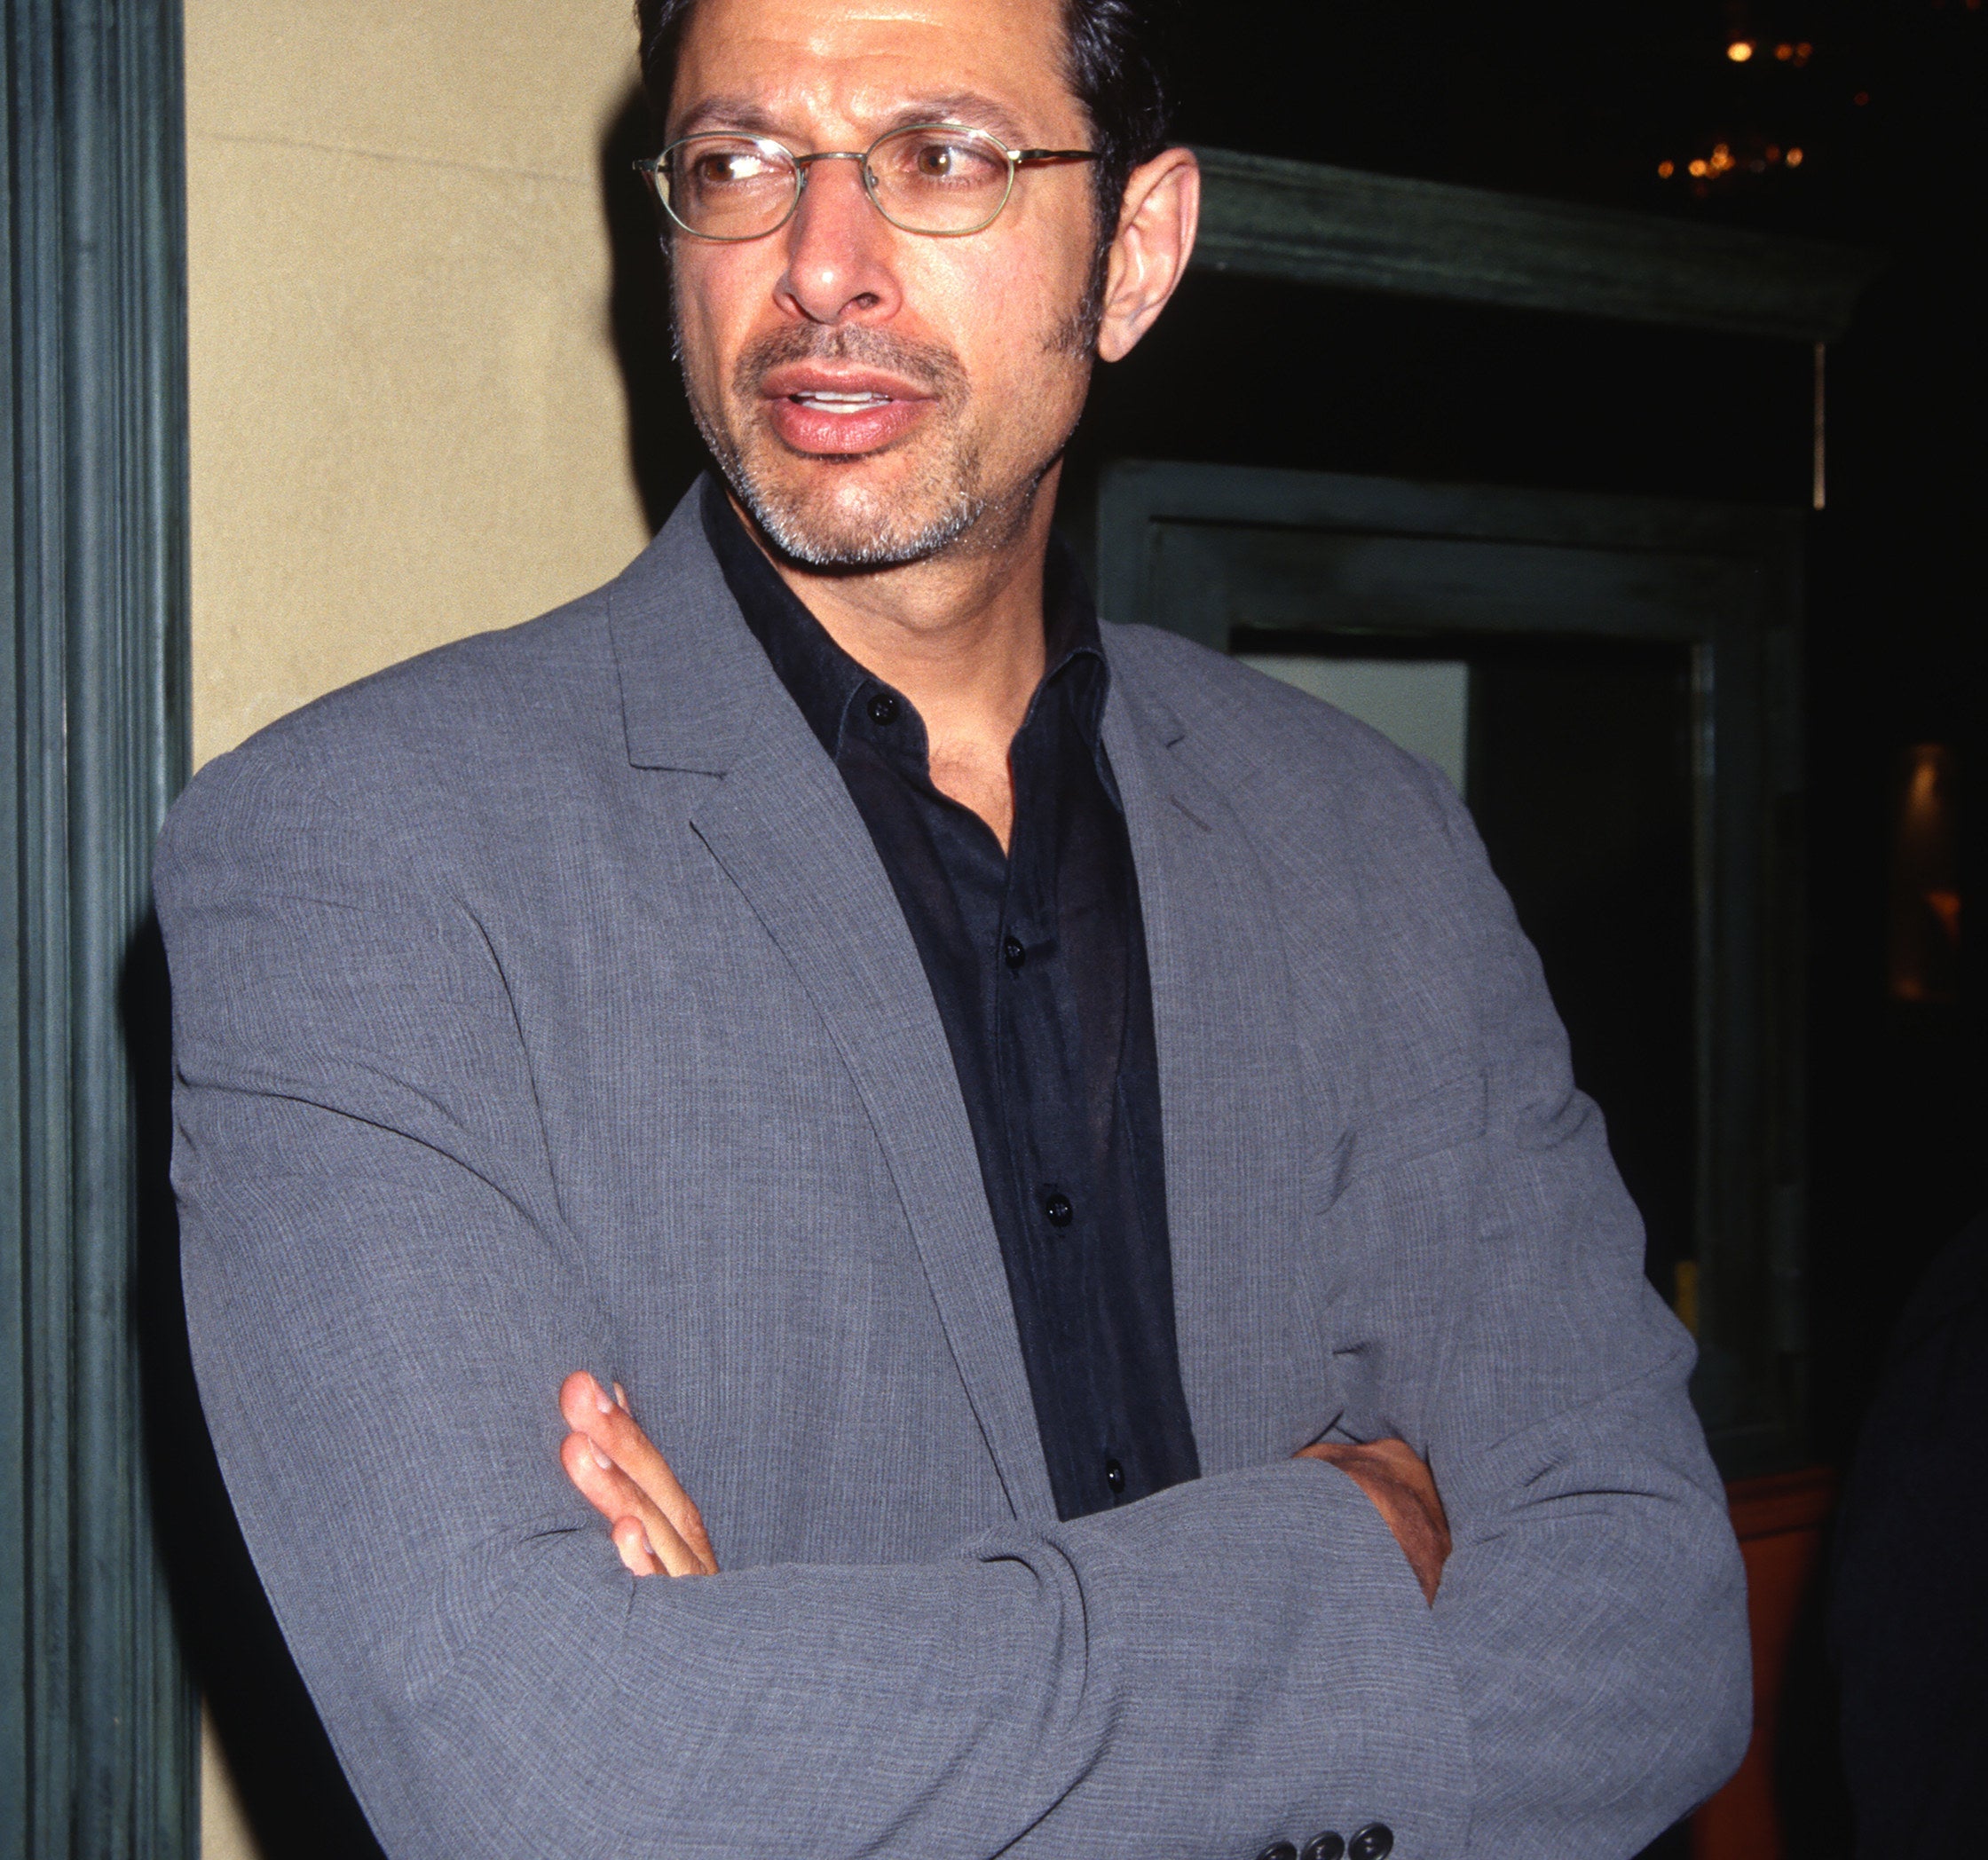 Jeff Goldblum wearing a grey suit and black shirt